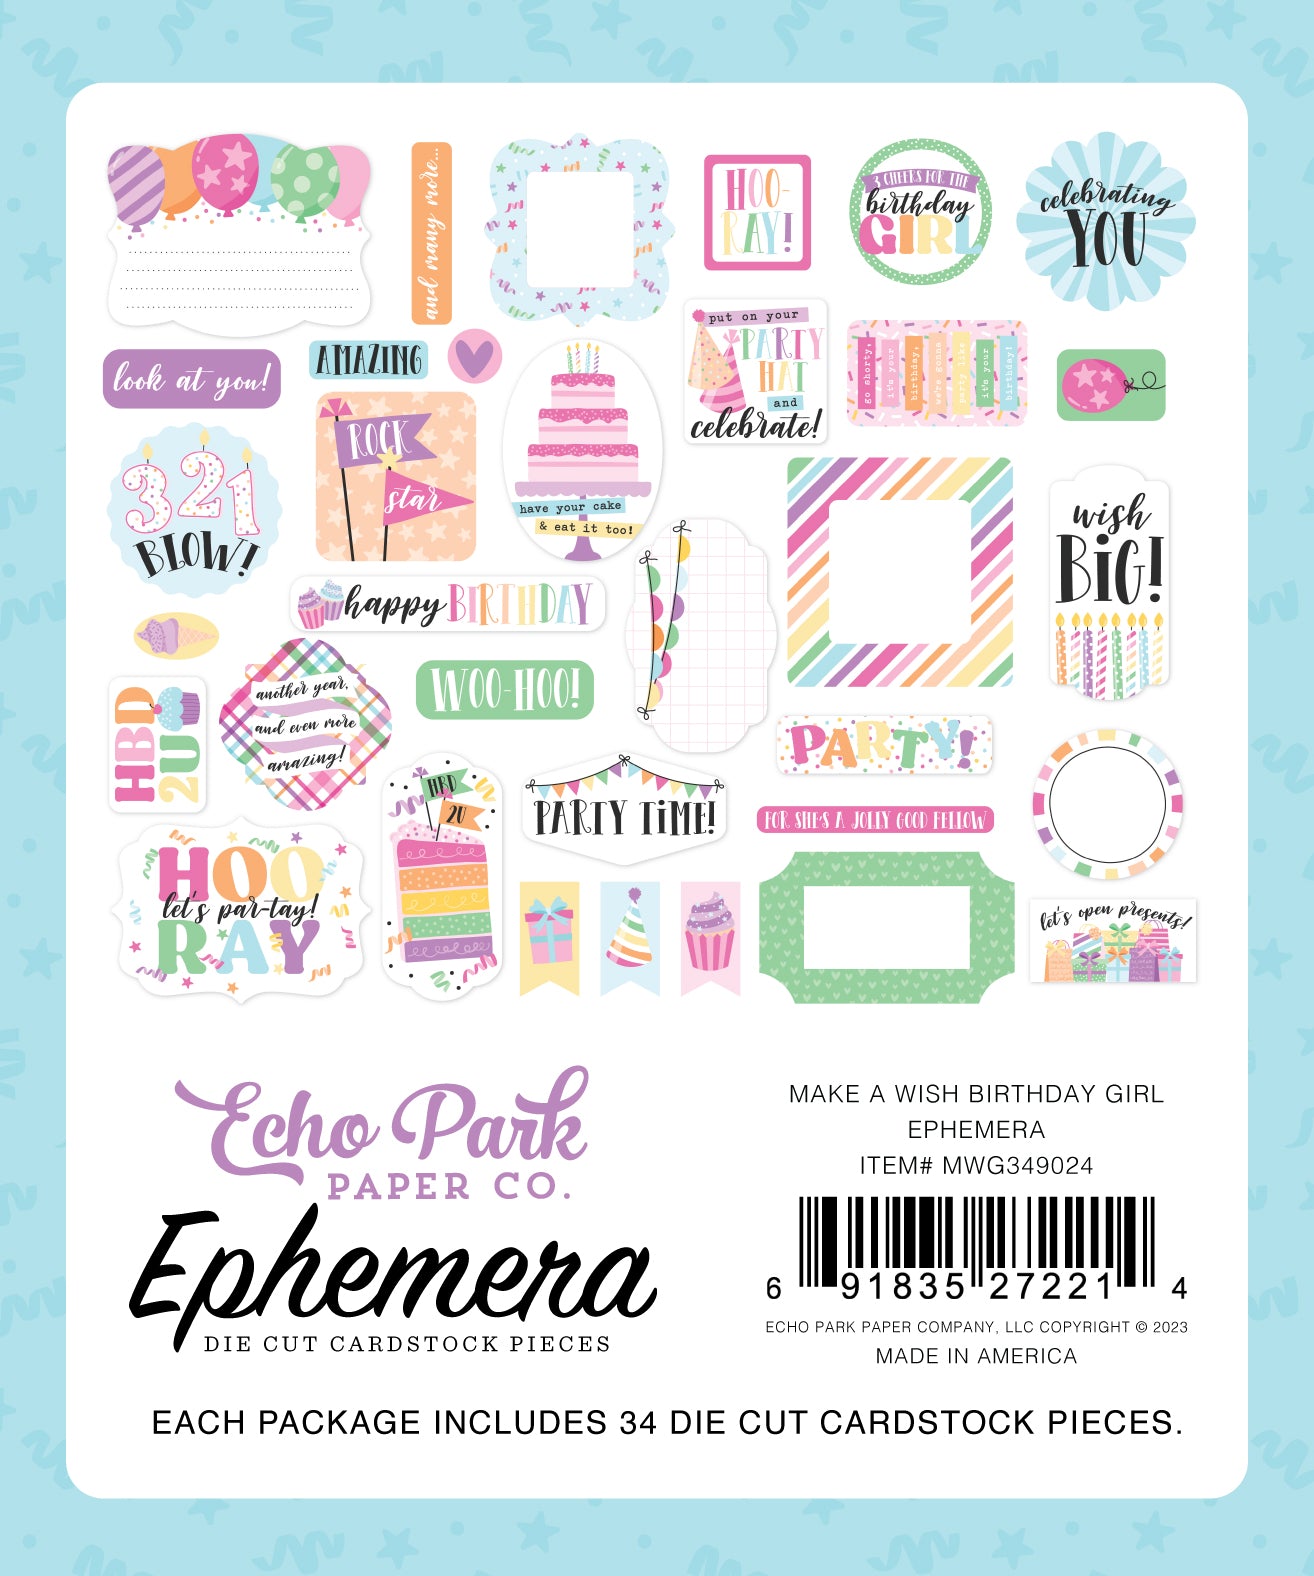 Make a Wish Birthday Girl Collection 4x8 Scrapbook Ephemera by Echo Park Paper